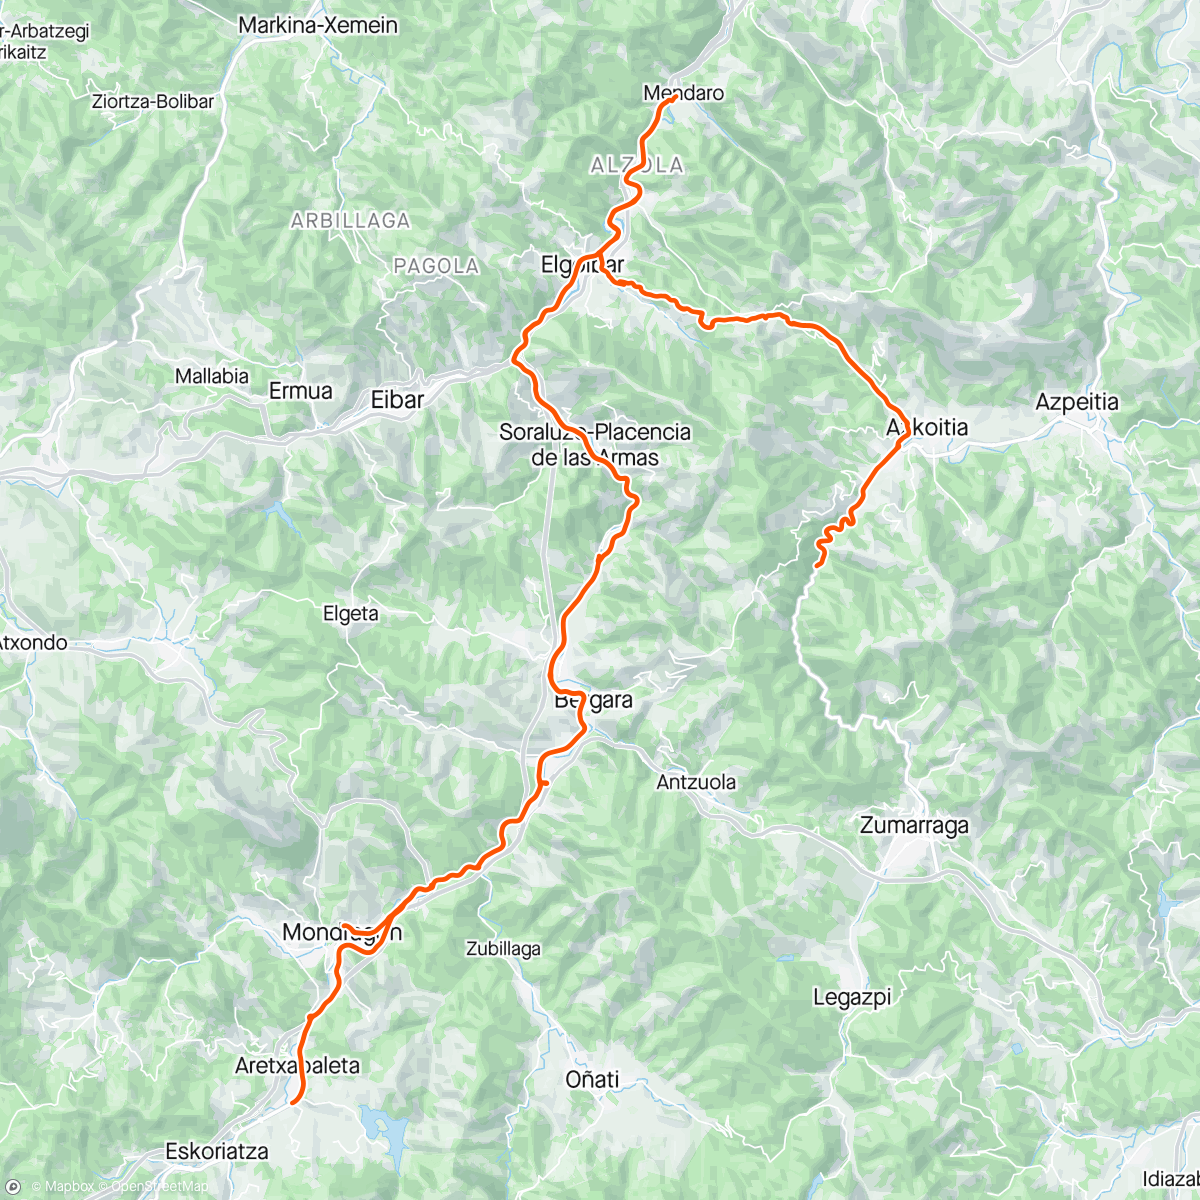 Kaart van de activiteit “Vuelta ciclista a la hora del almuerzo”